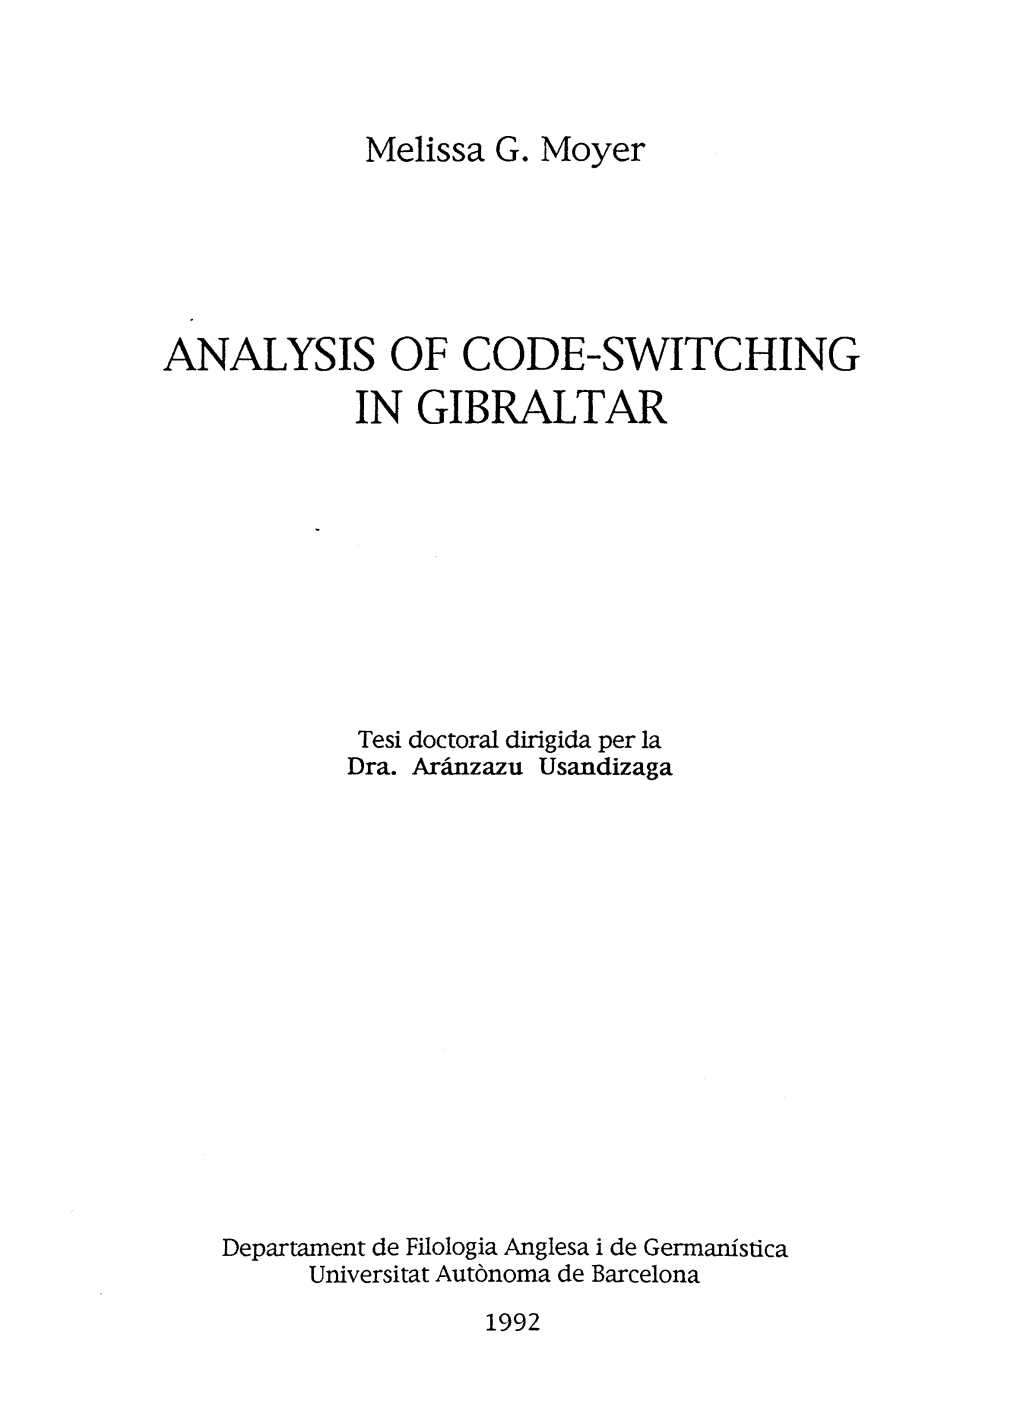 Analysis of Code-Switching in Gibraltar